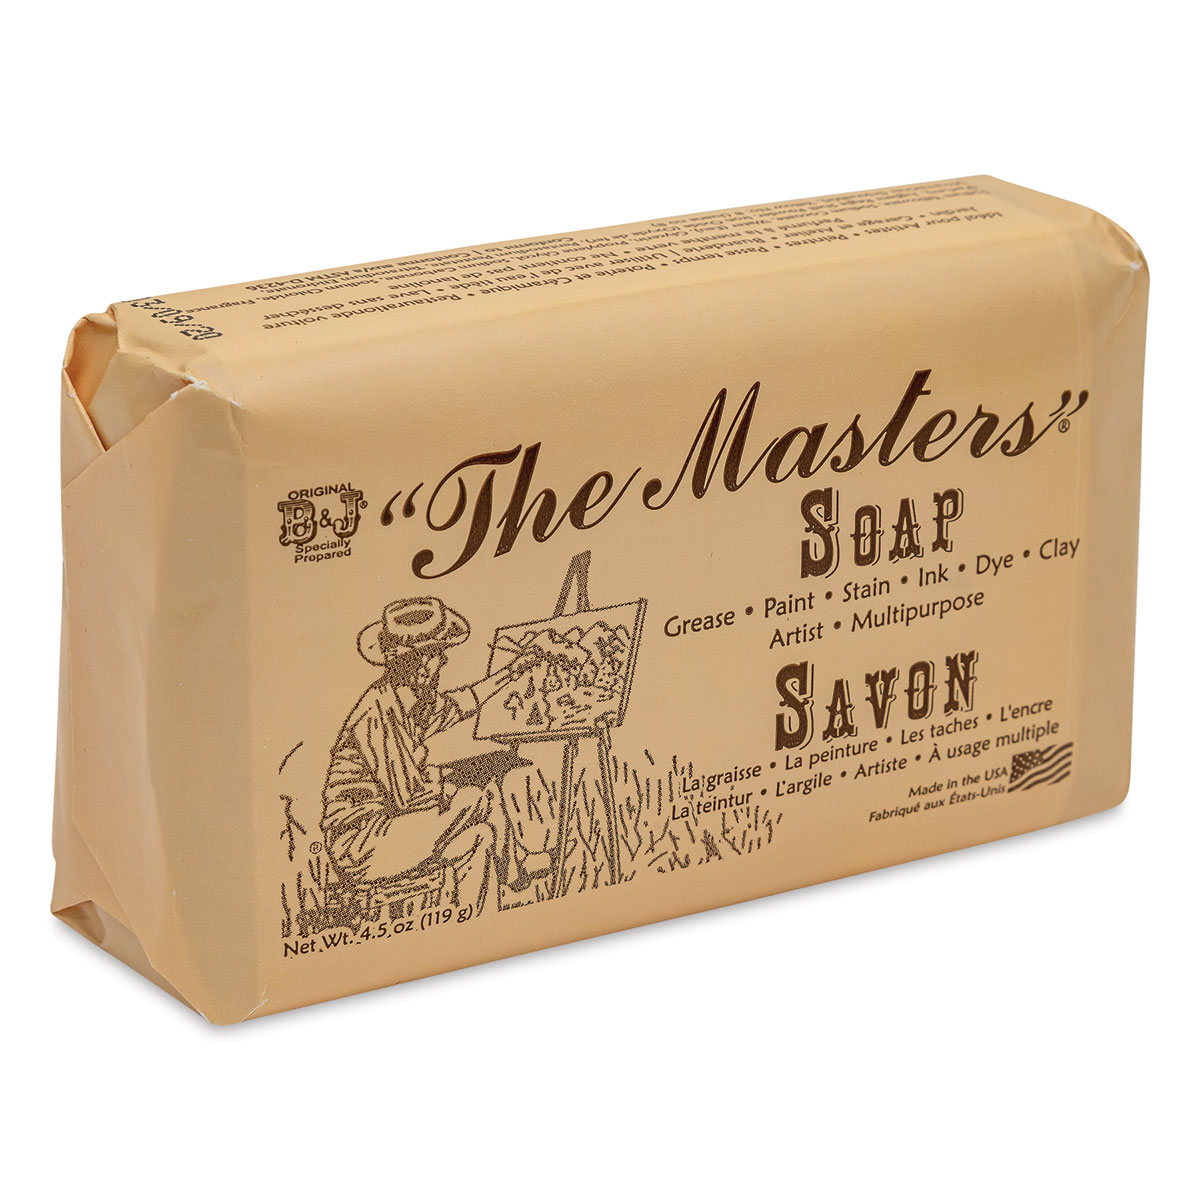 The Masters Brush Cleaner and Preserver & Handsoap at New River Art & Fiber